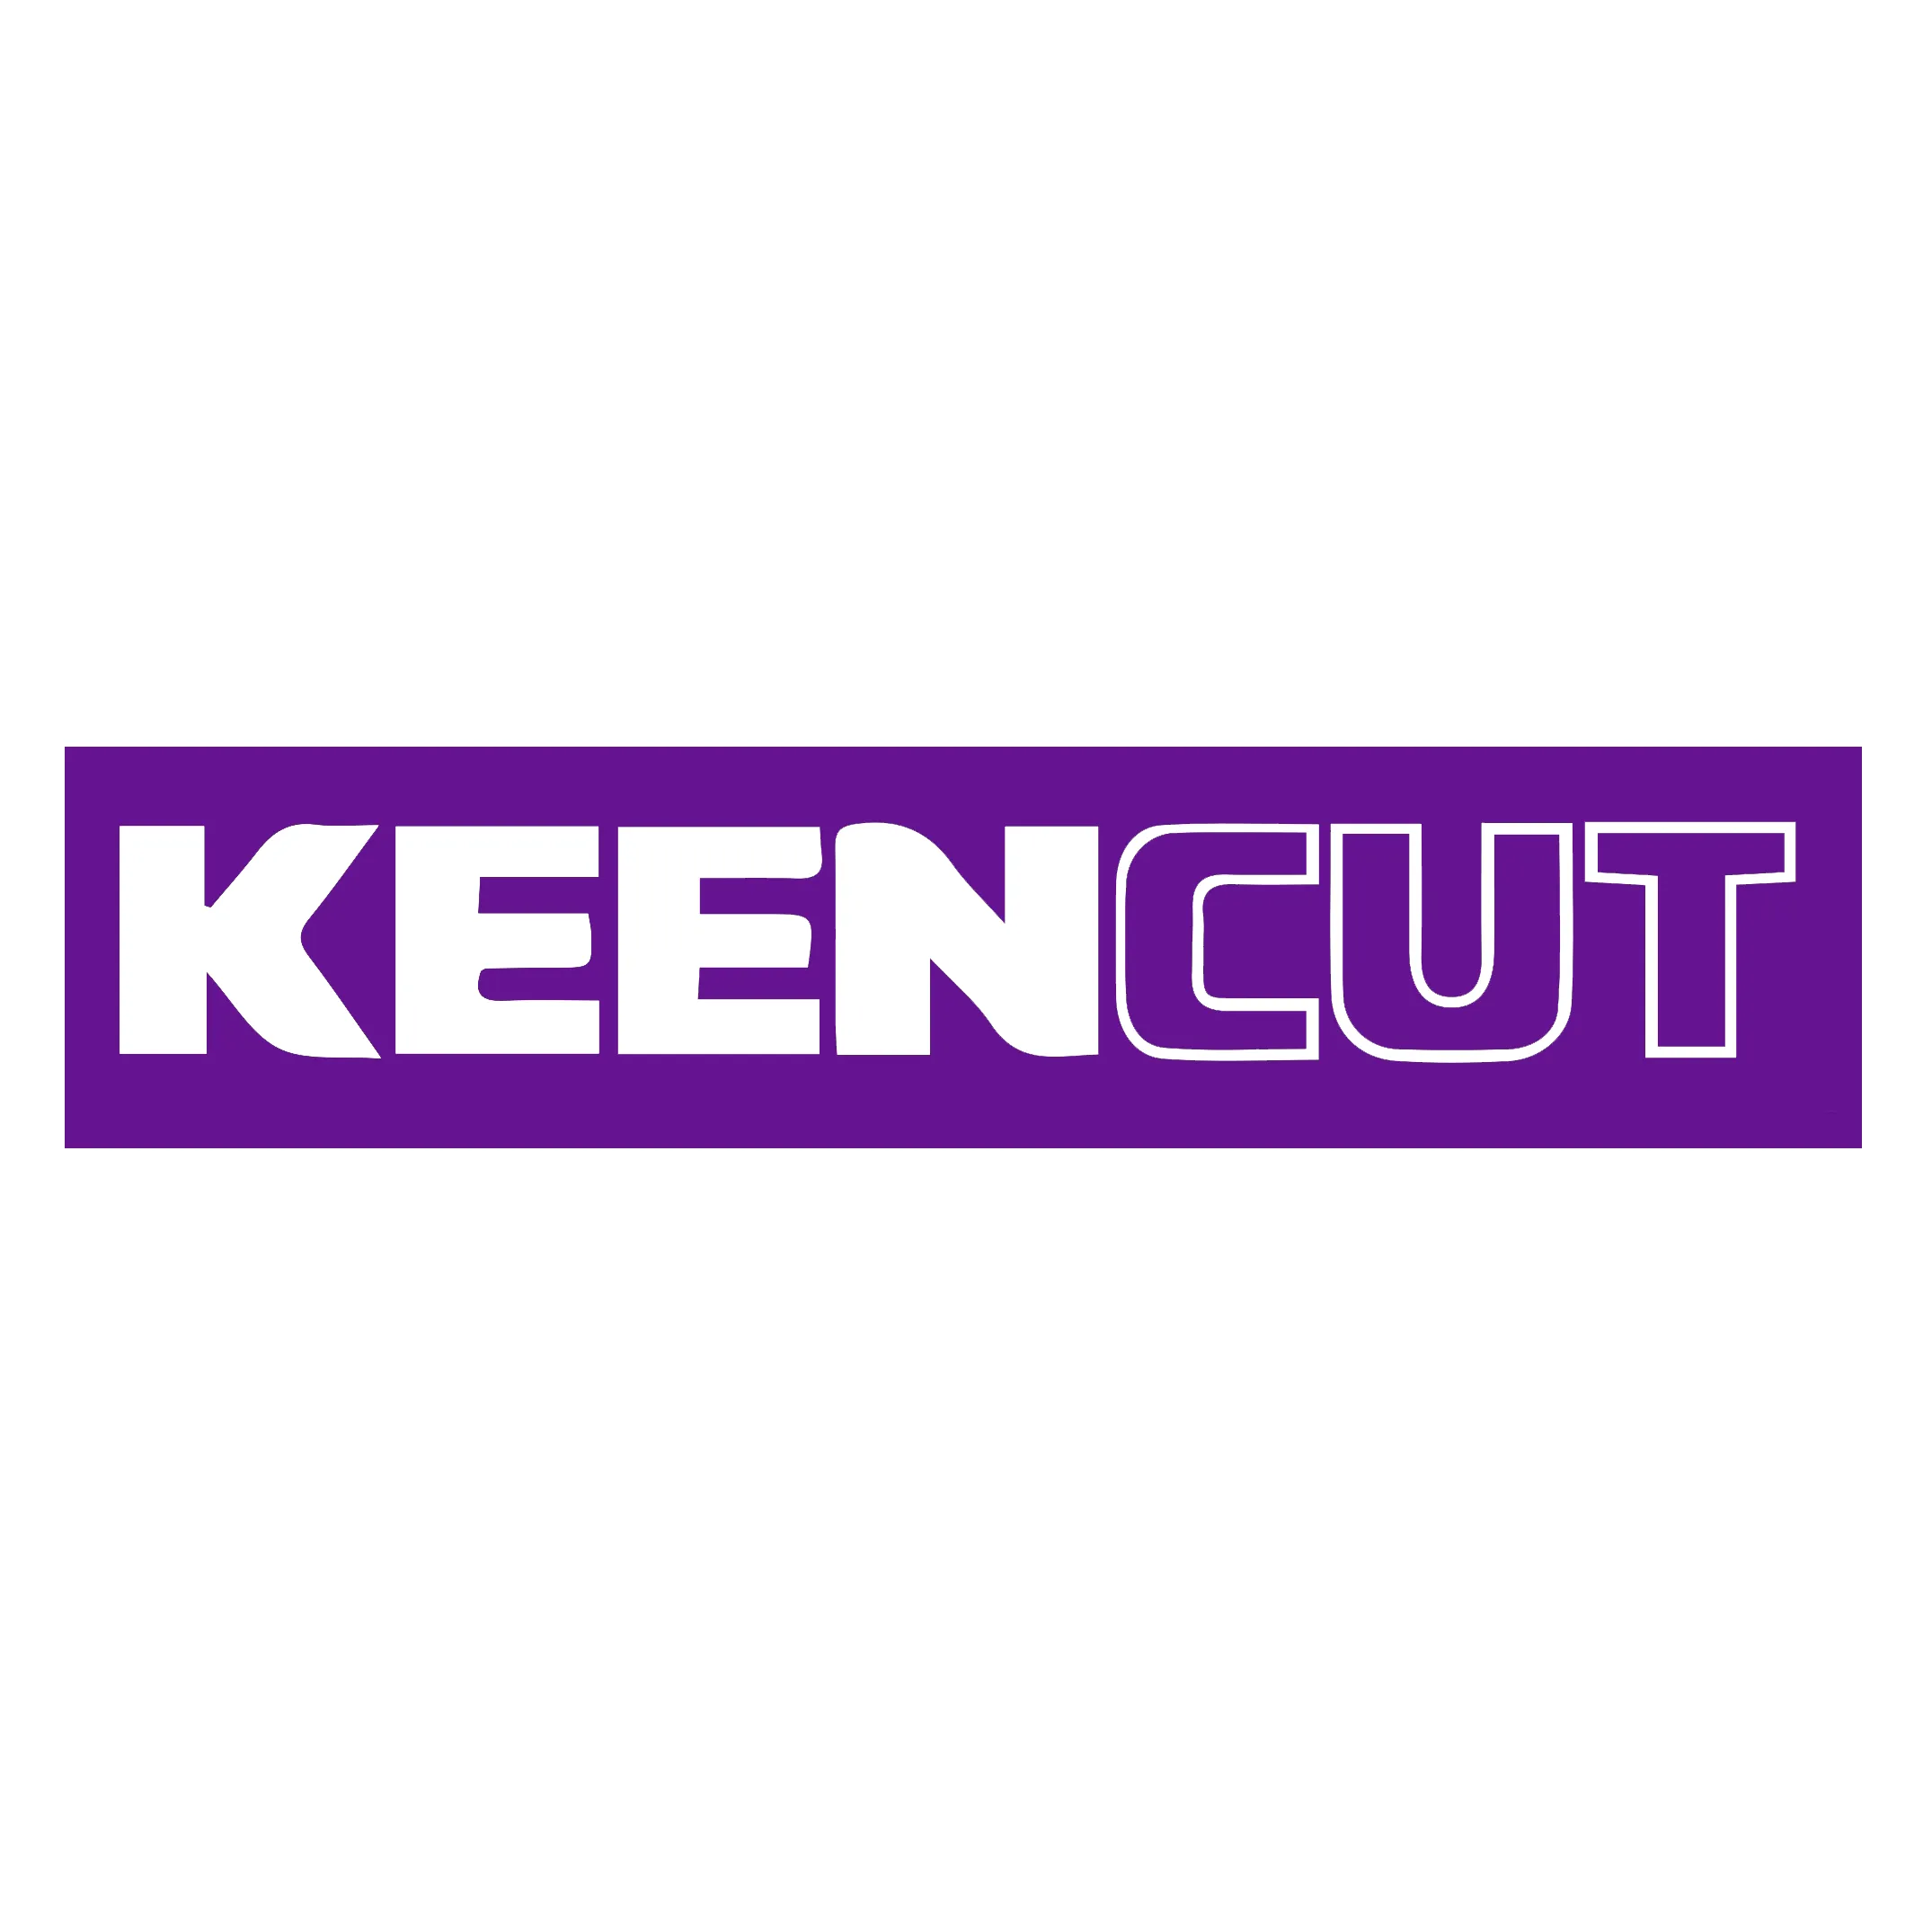 Keencut logo_result